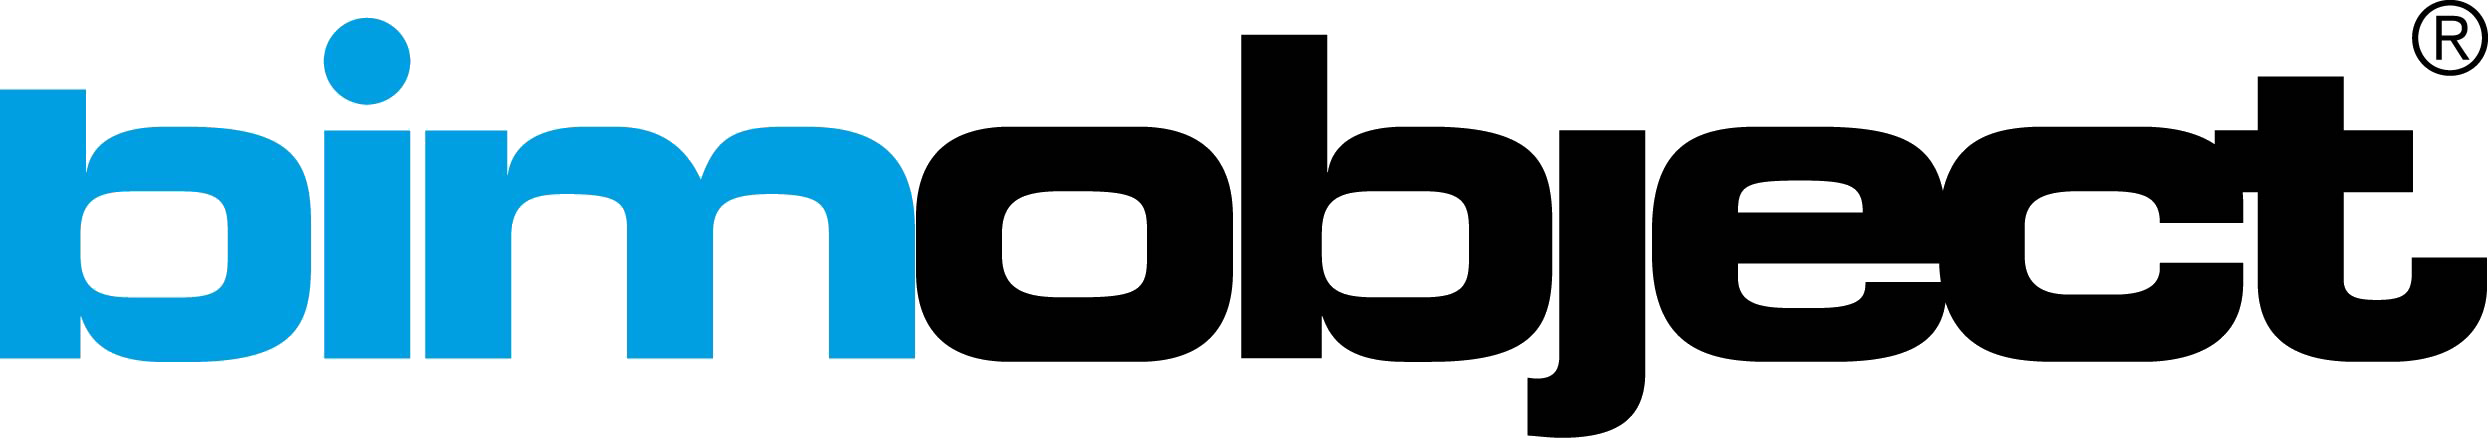 Technical Consultation - Logo Bim Object (2488x438)